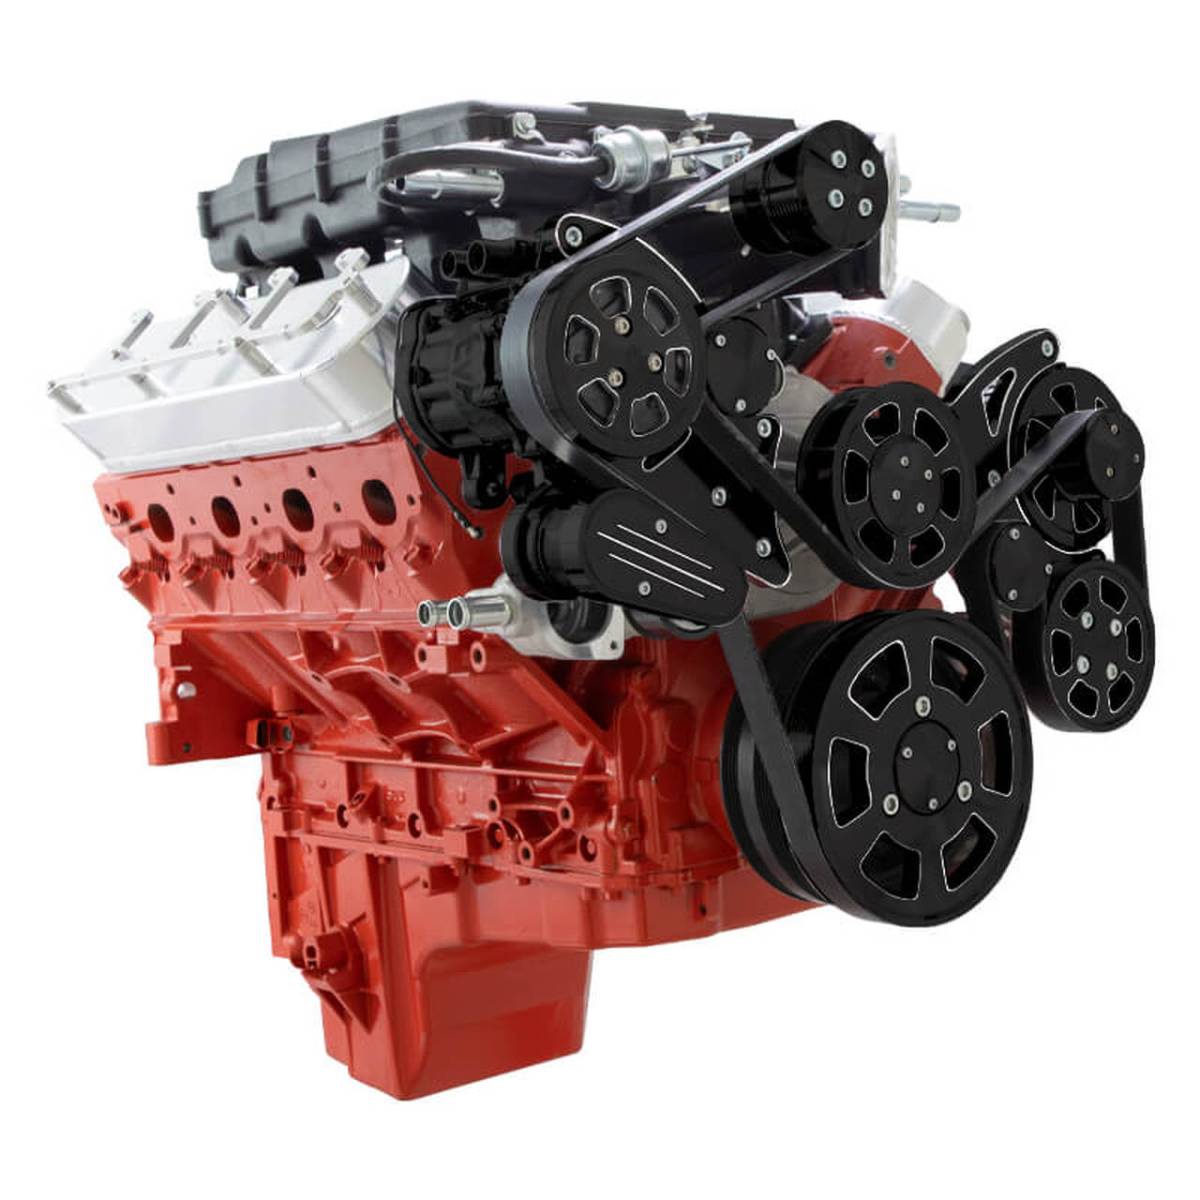 CVF Racing - CVF Wraptor Chevy LS Engine Magnuson Serpentine Bracket System with Alternator & PS - Black Diamond Finish - Image 1